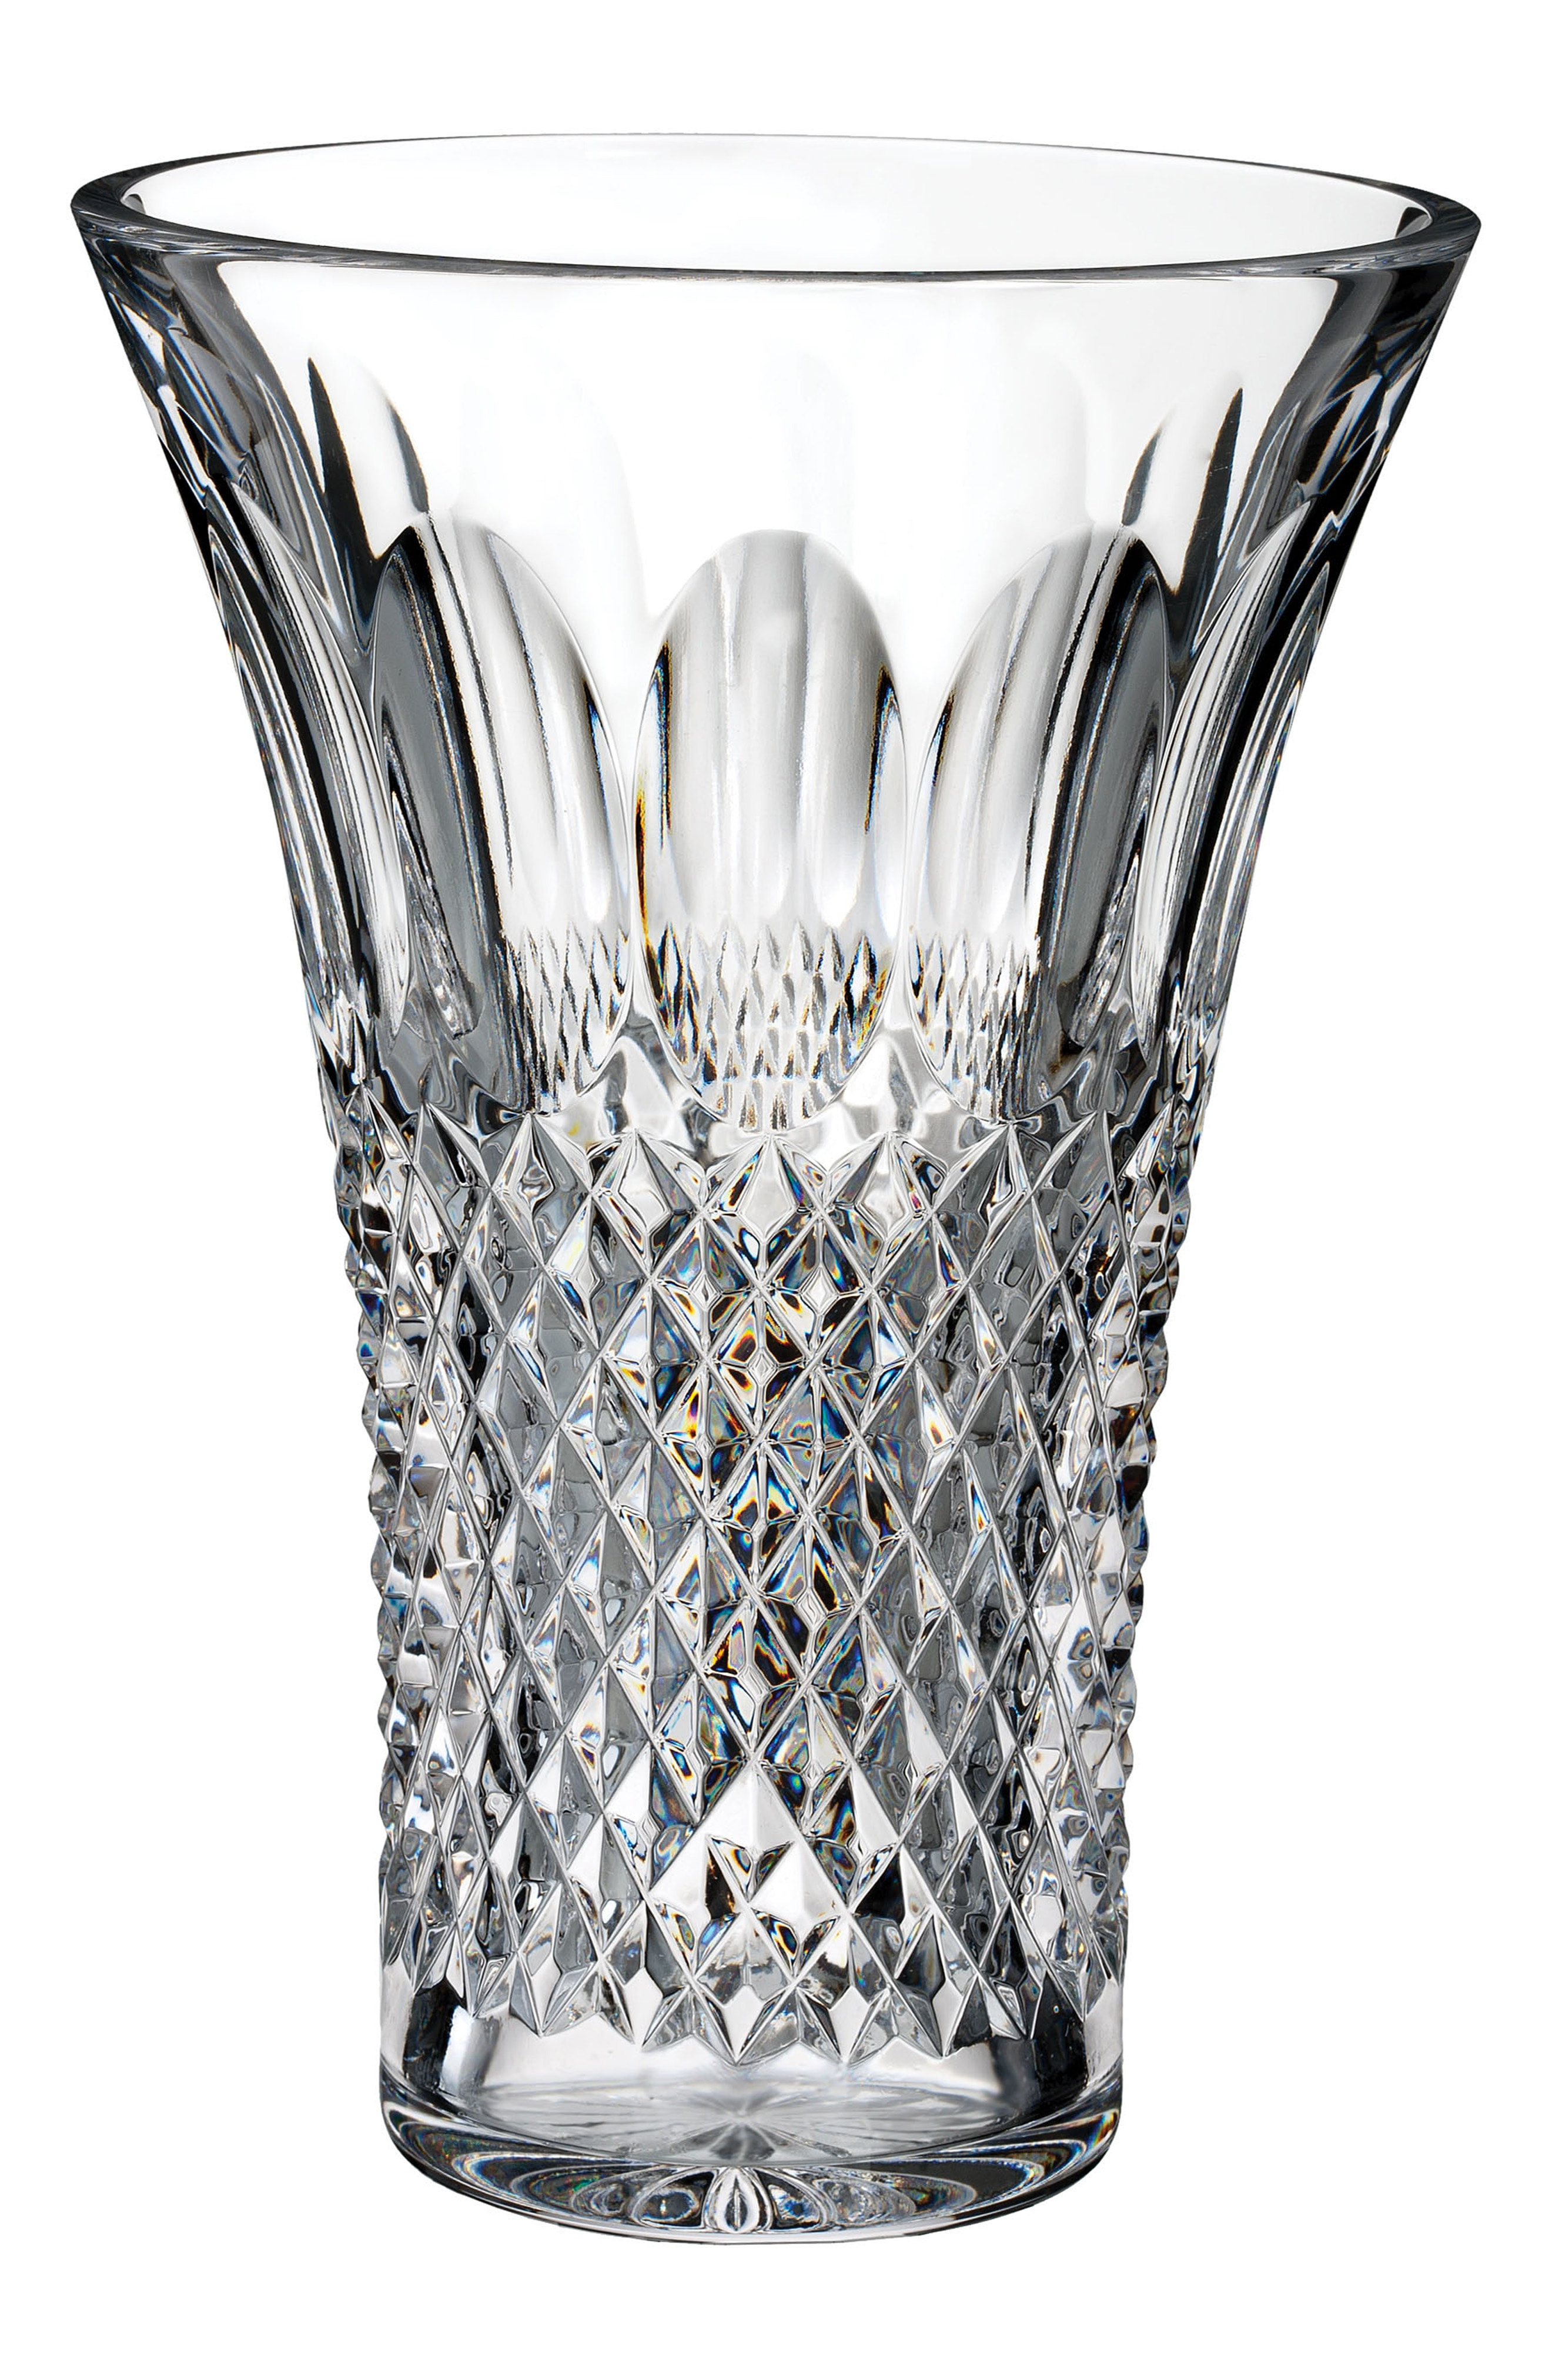 12 Nice orrefors Crystal Bud Vase 2022 free download orrefors crystal bud vase of crystal vase nordstrom throughout 104292247